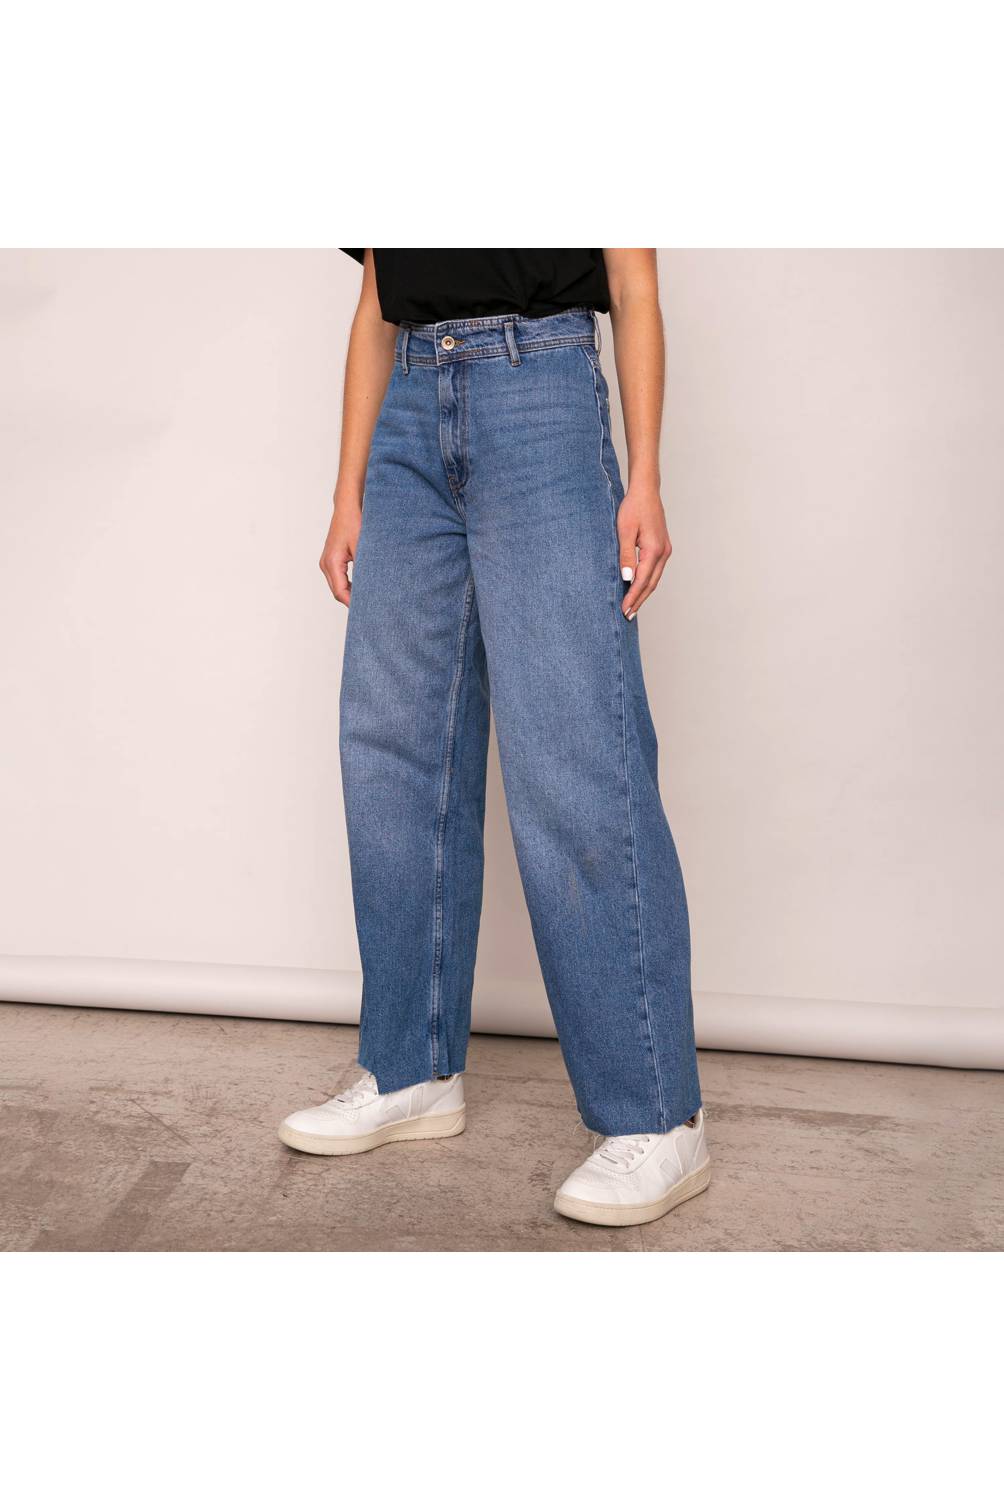 ONLY Jeans Tiro Alto Algodón Mujer Only